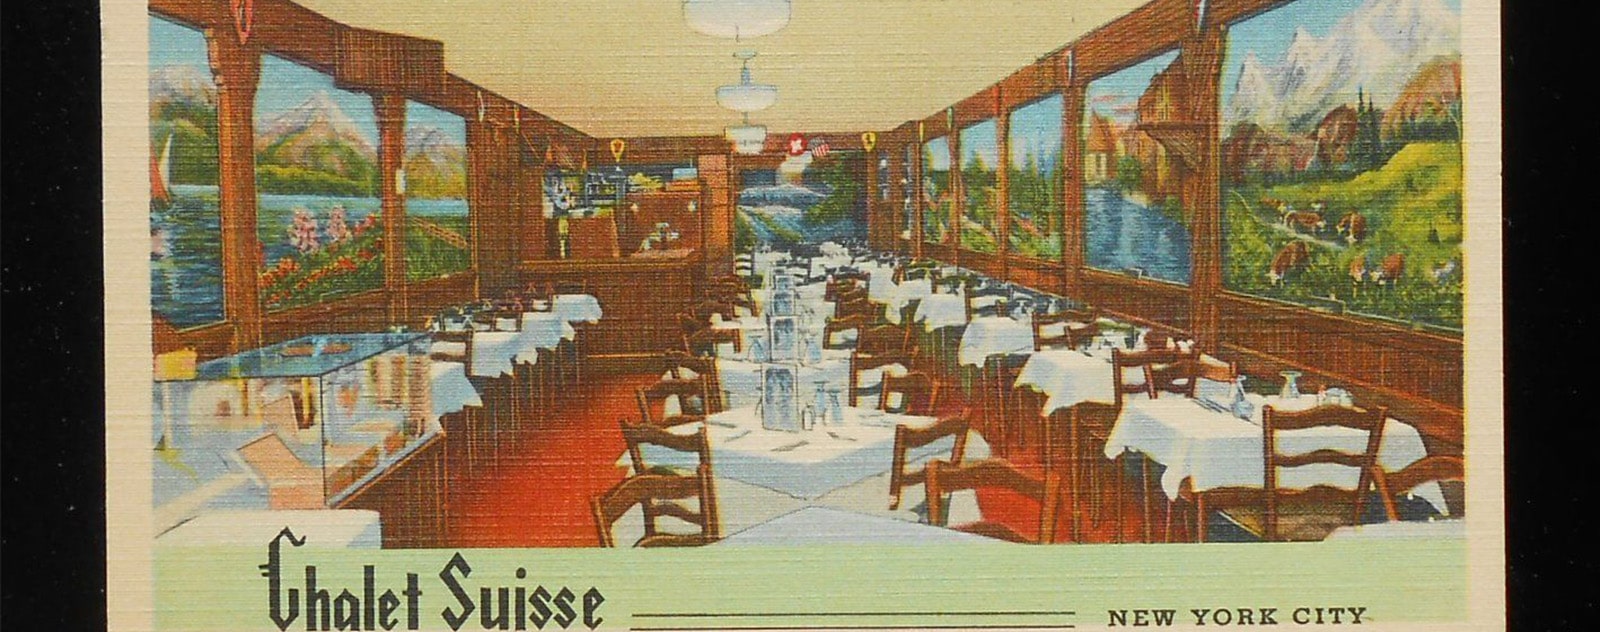 Chalet Suisse Restaurant